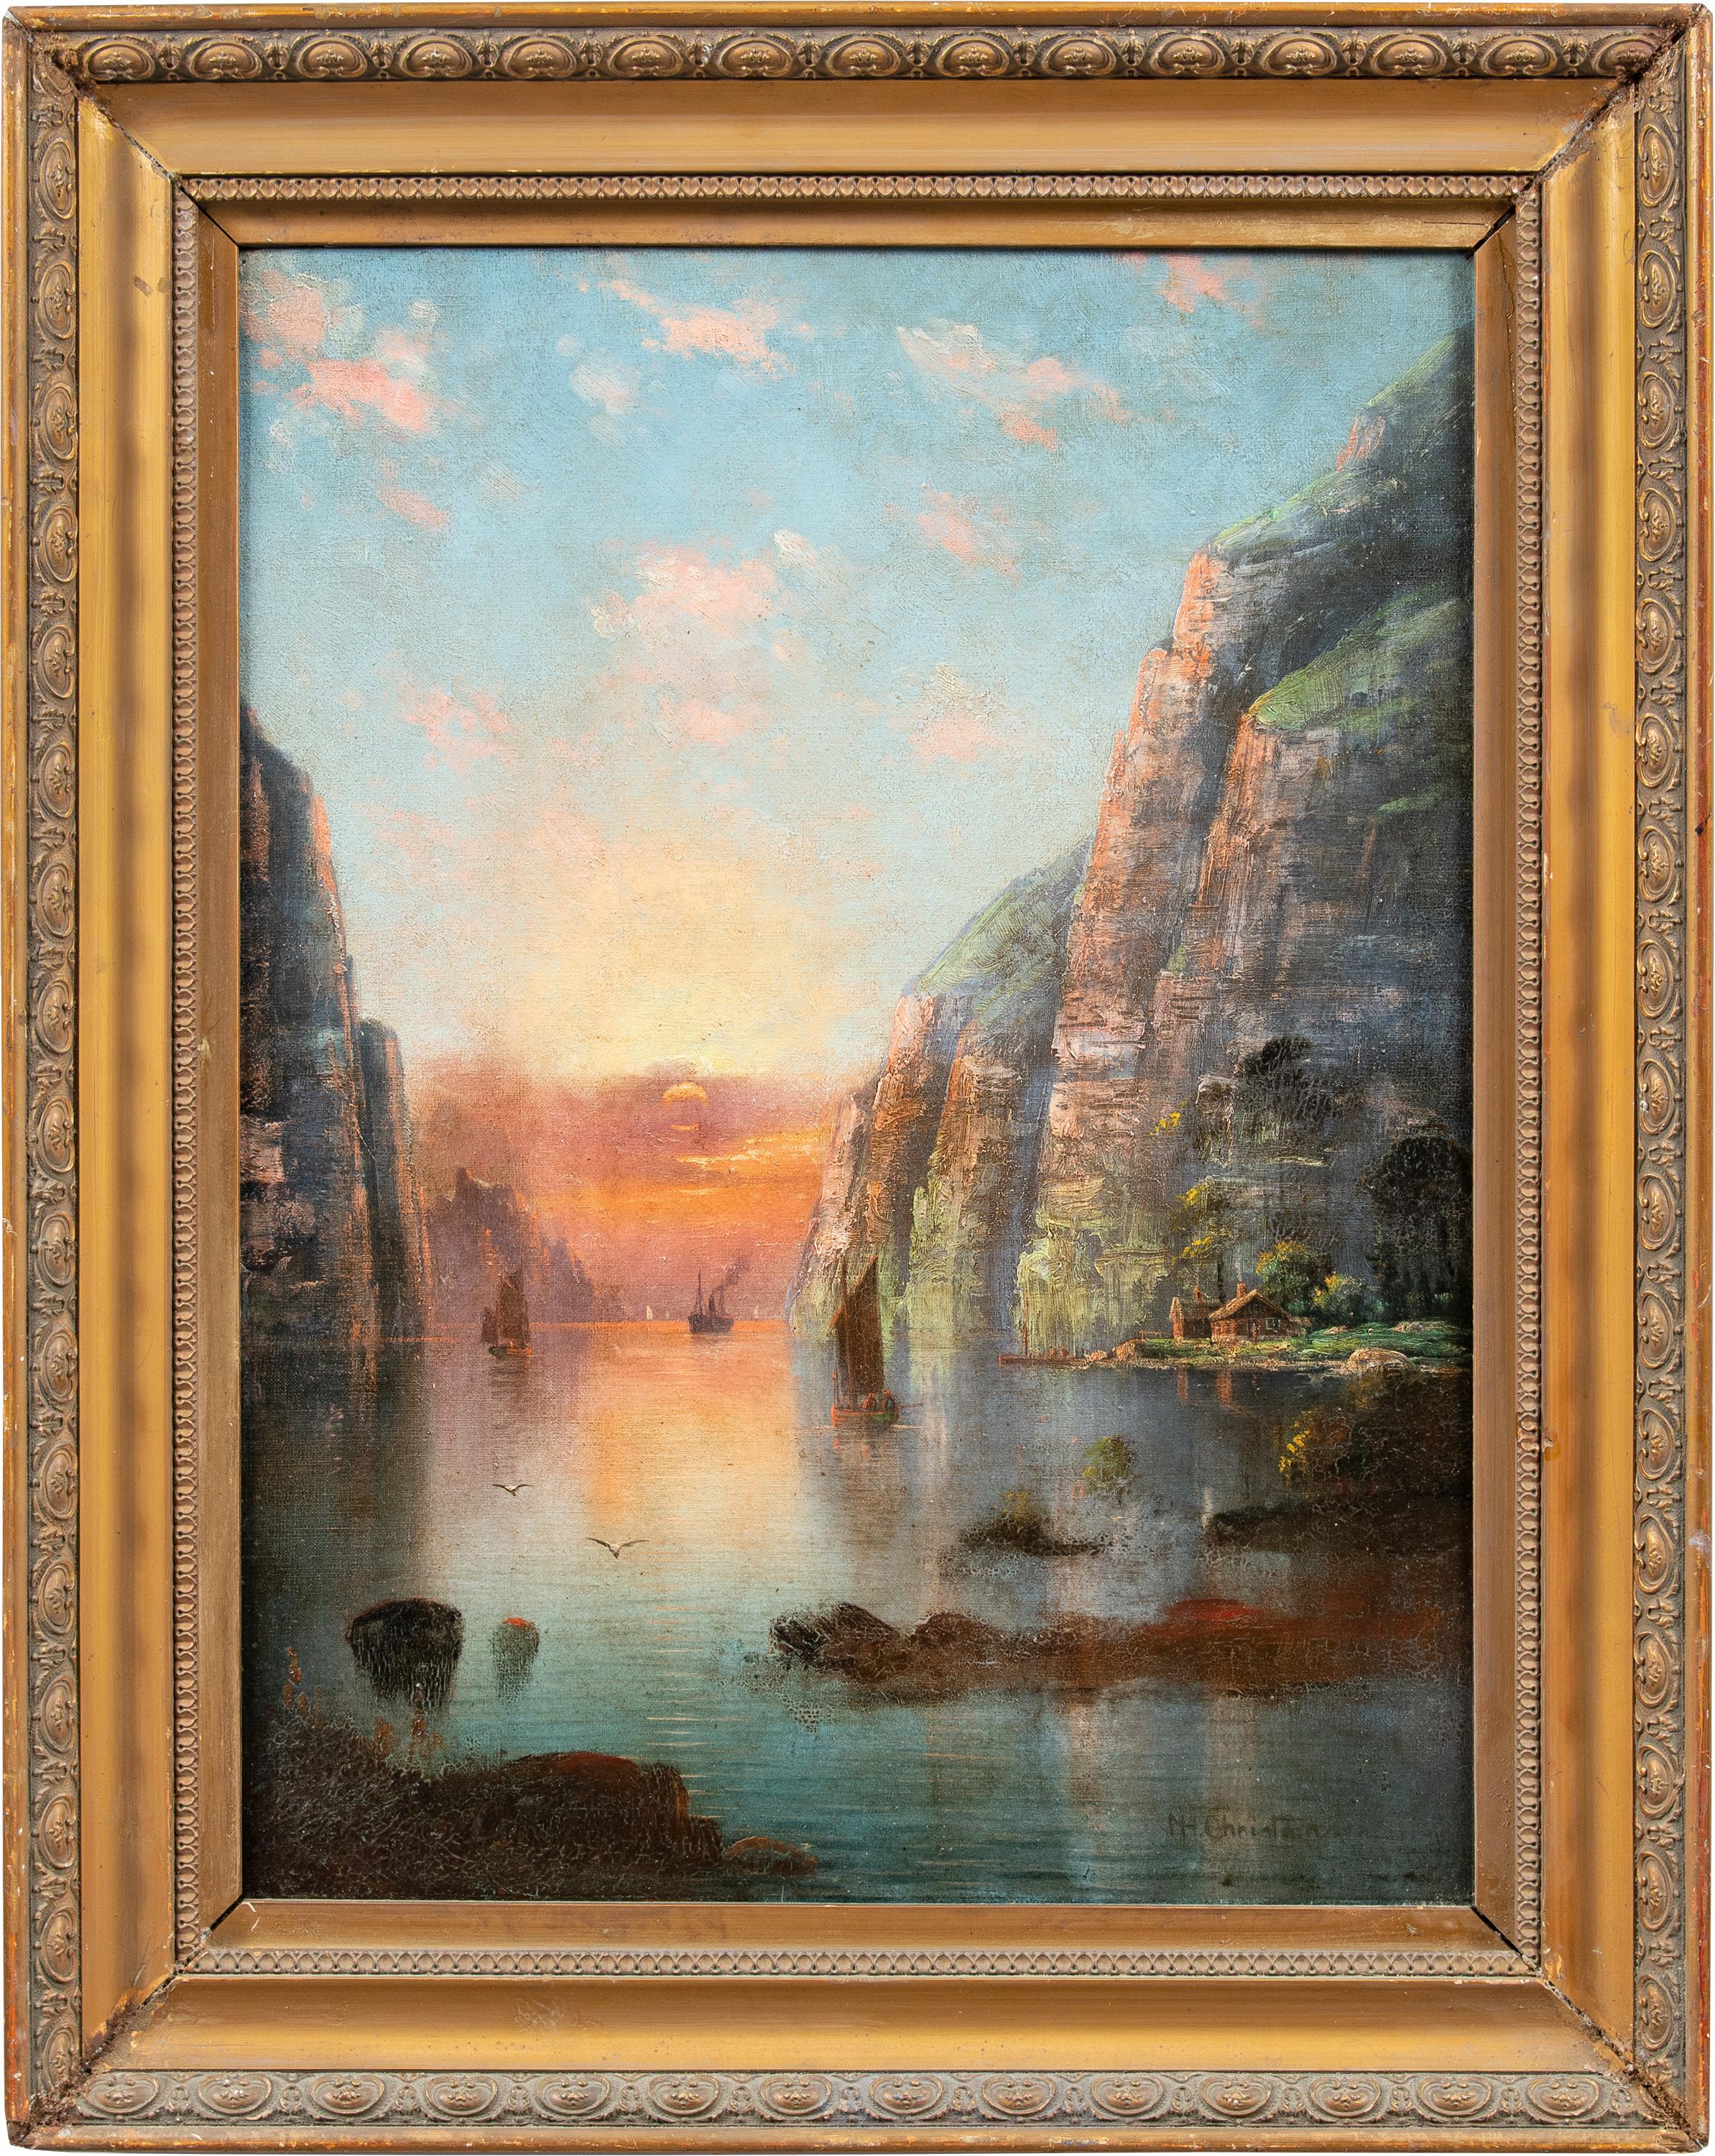 Nils Hans Christiansen Landscape Painting - Nils Christiansen (Danish painter) - 19th century landscape painting - Sunset